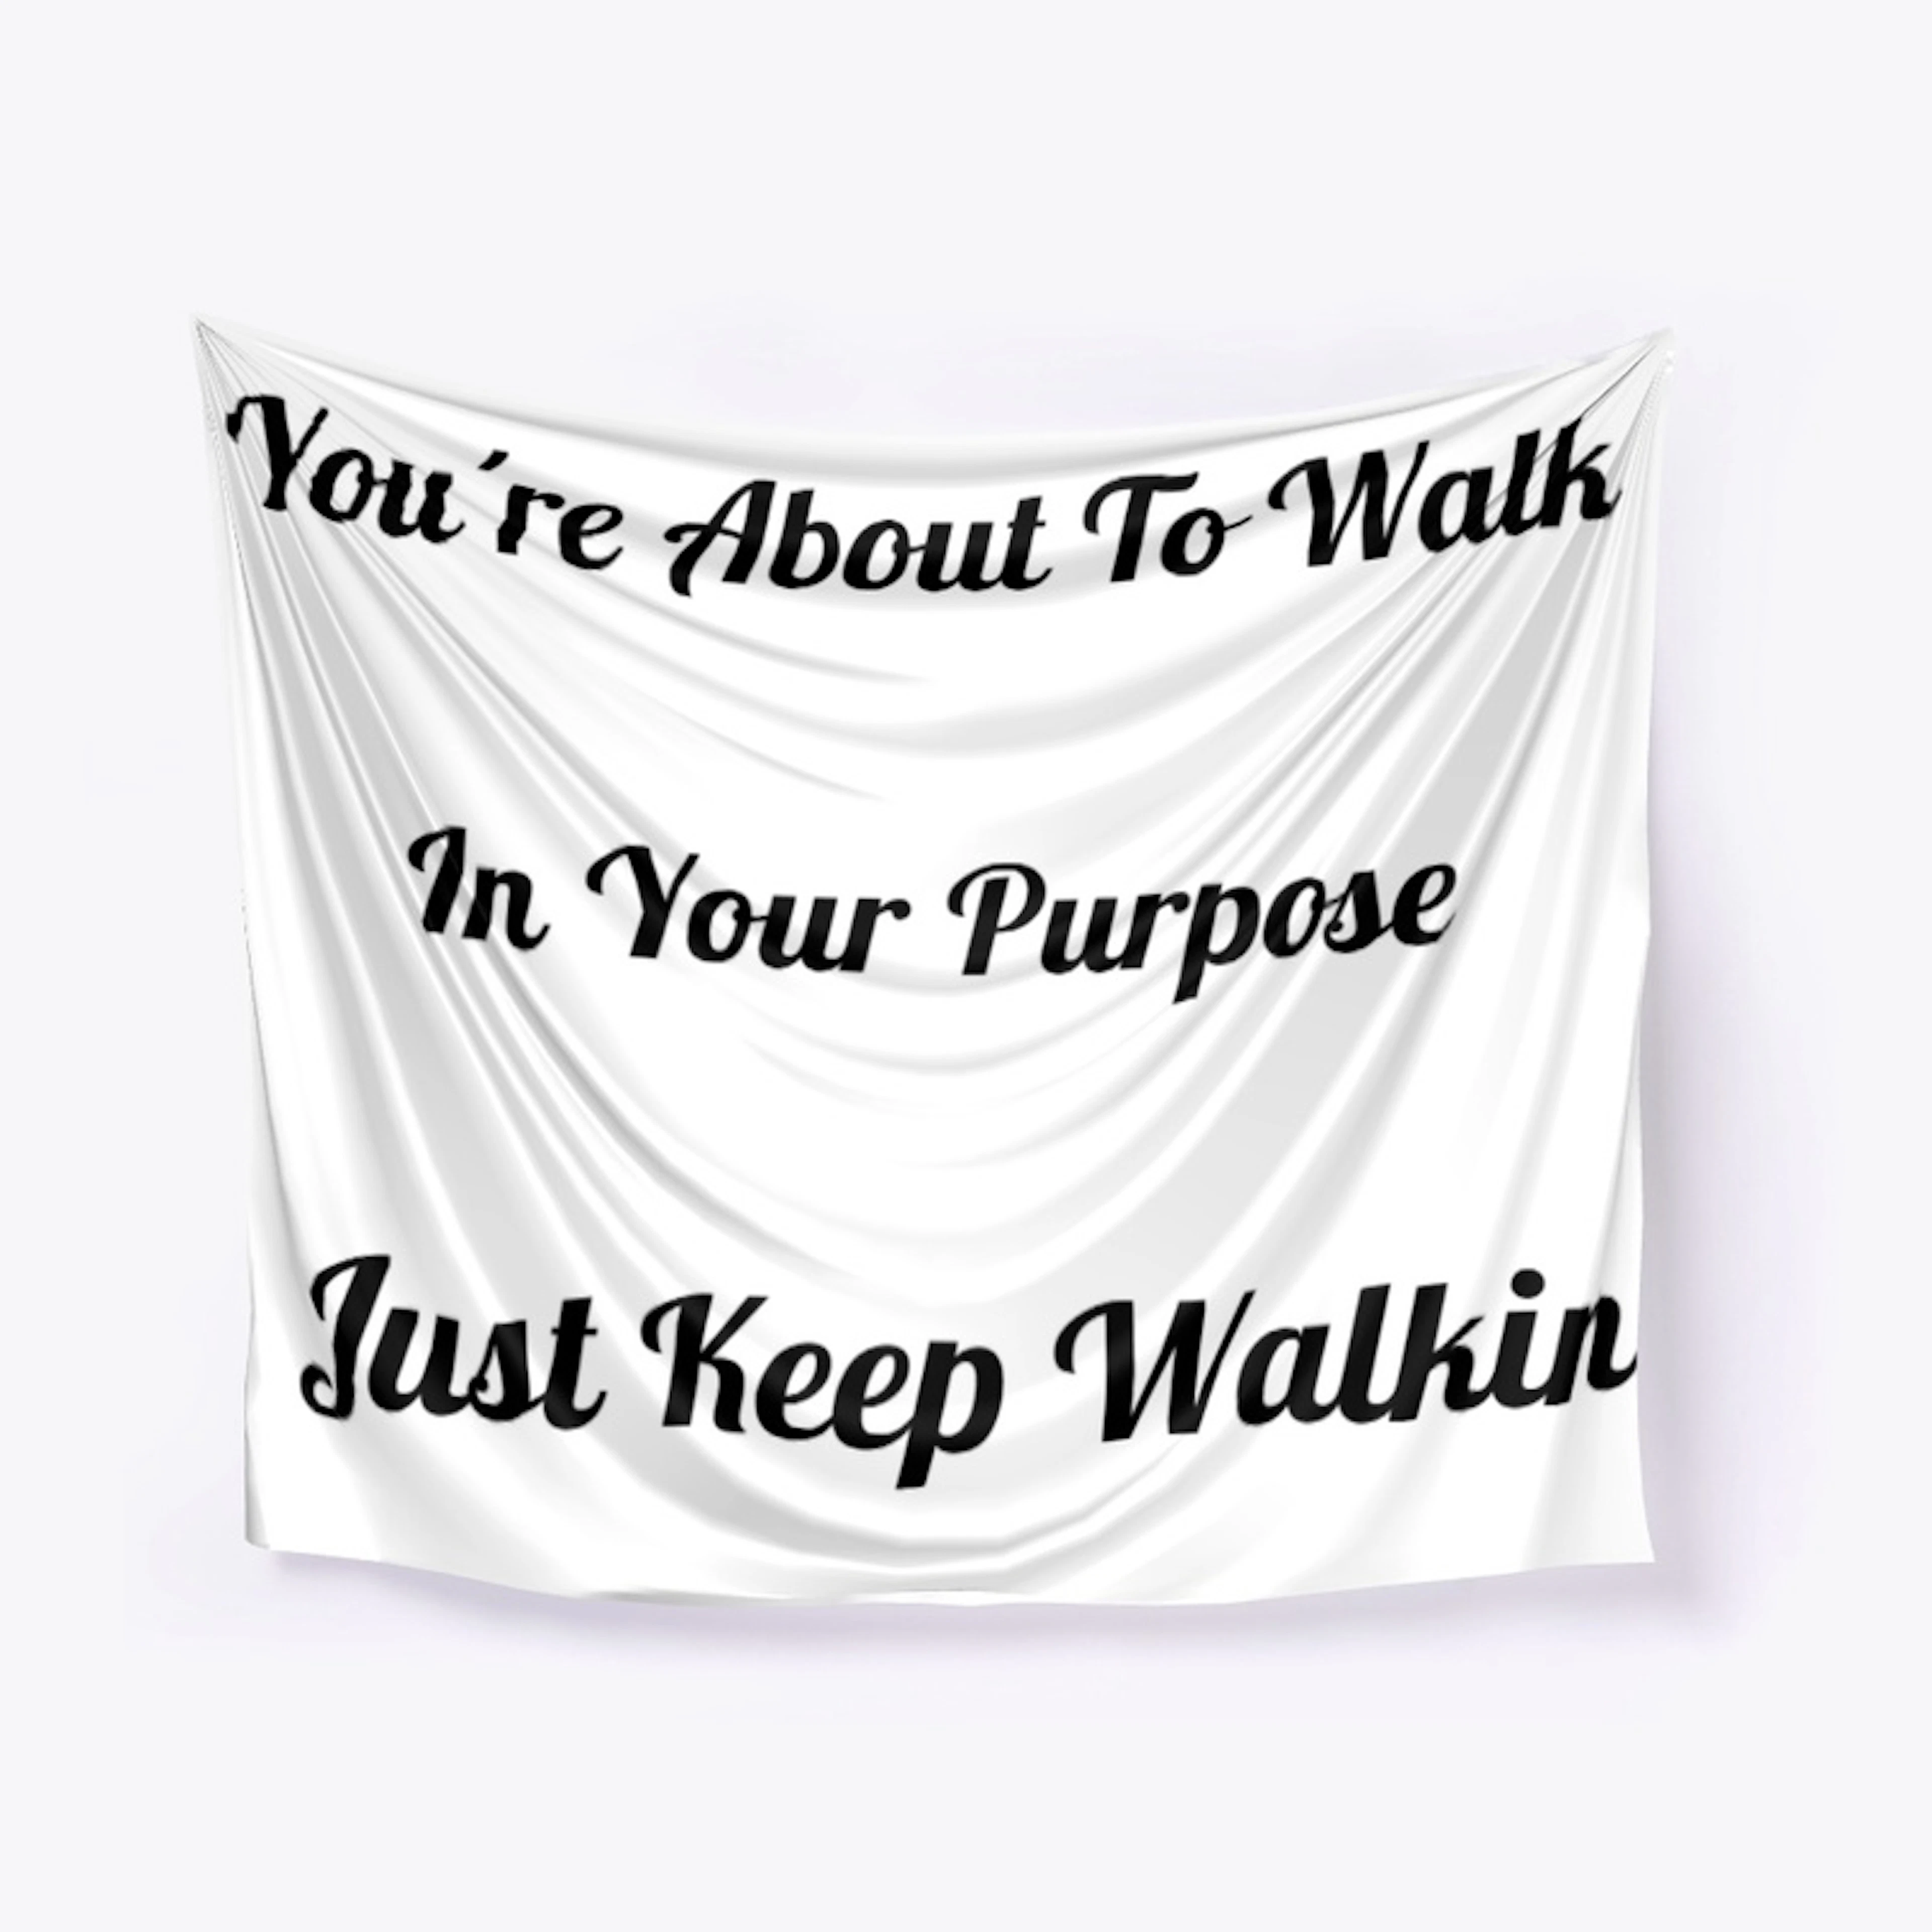 Just Keep Walkin' in Your Purpose